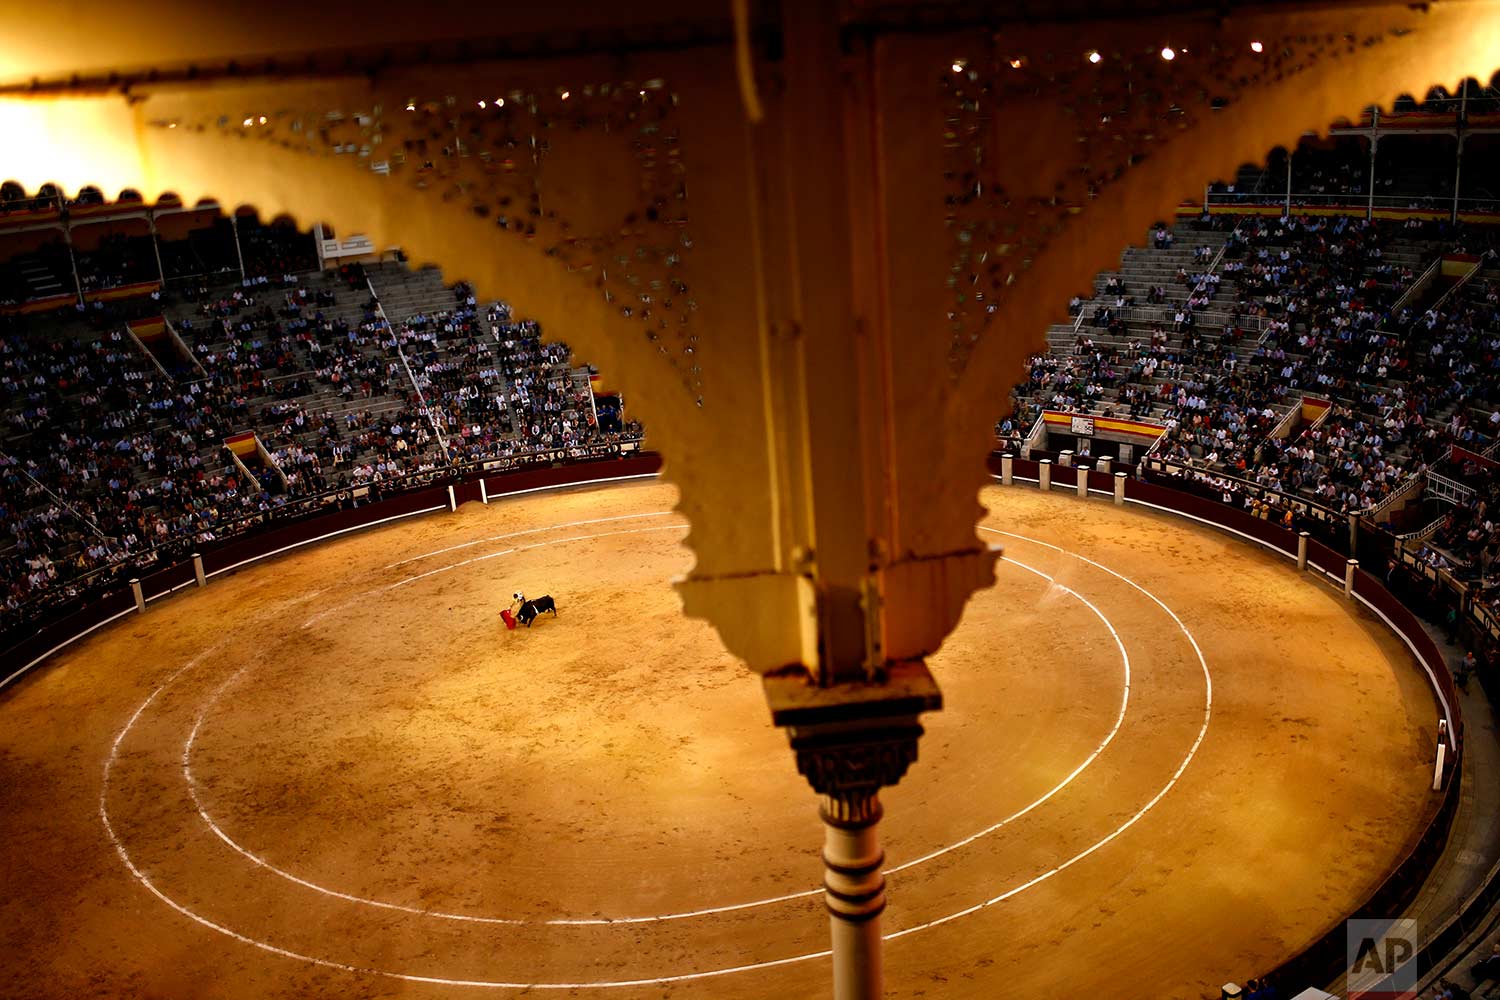  In this Tuesday, May 16, 2017 photo, Spanish bullfighter Roman Collado performs with a Lagunajanda ranch fighting bull during a bullfight at the Las Ventas bullring in Madrid, Spain. (AP Photo/Francisco Seco) 